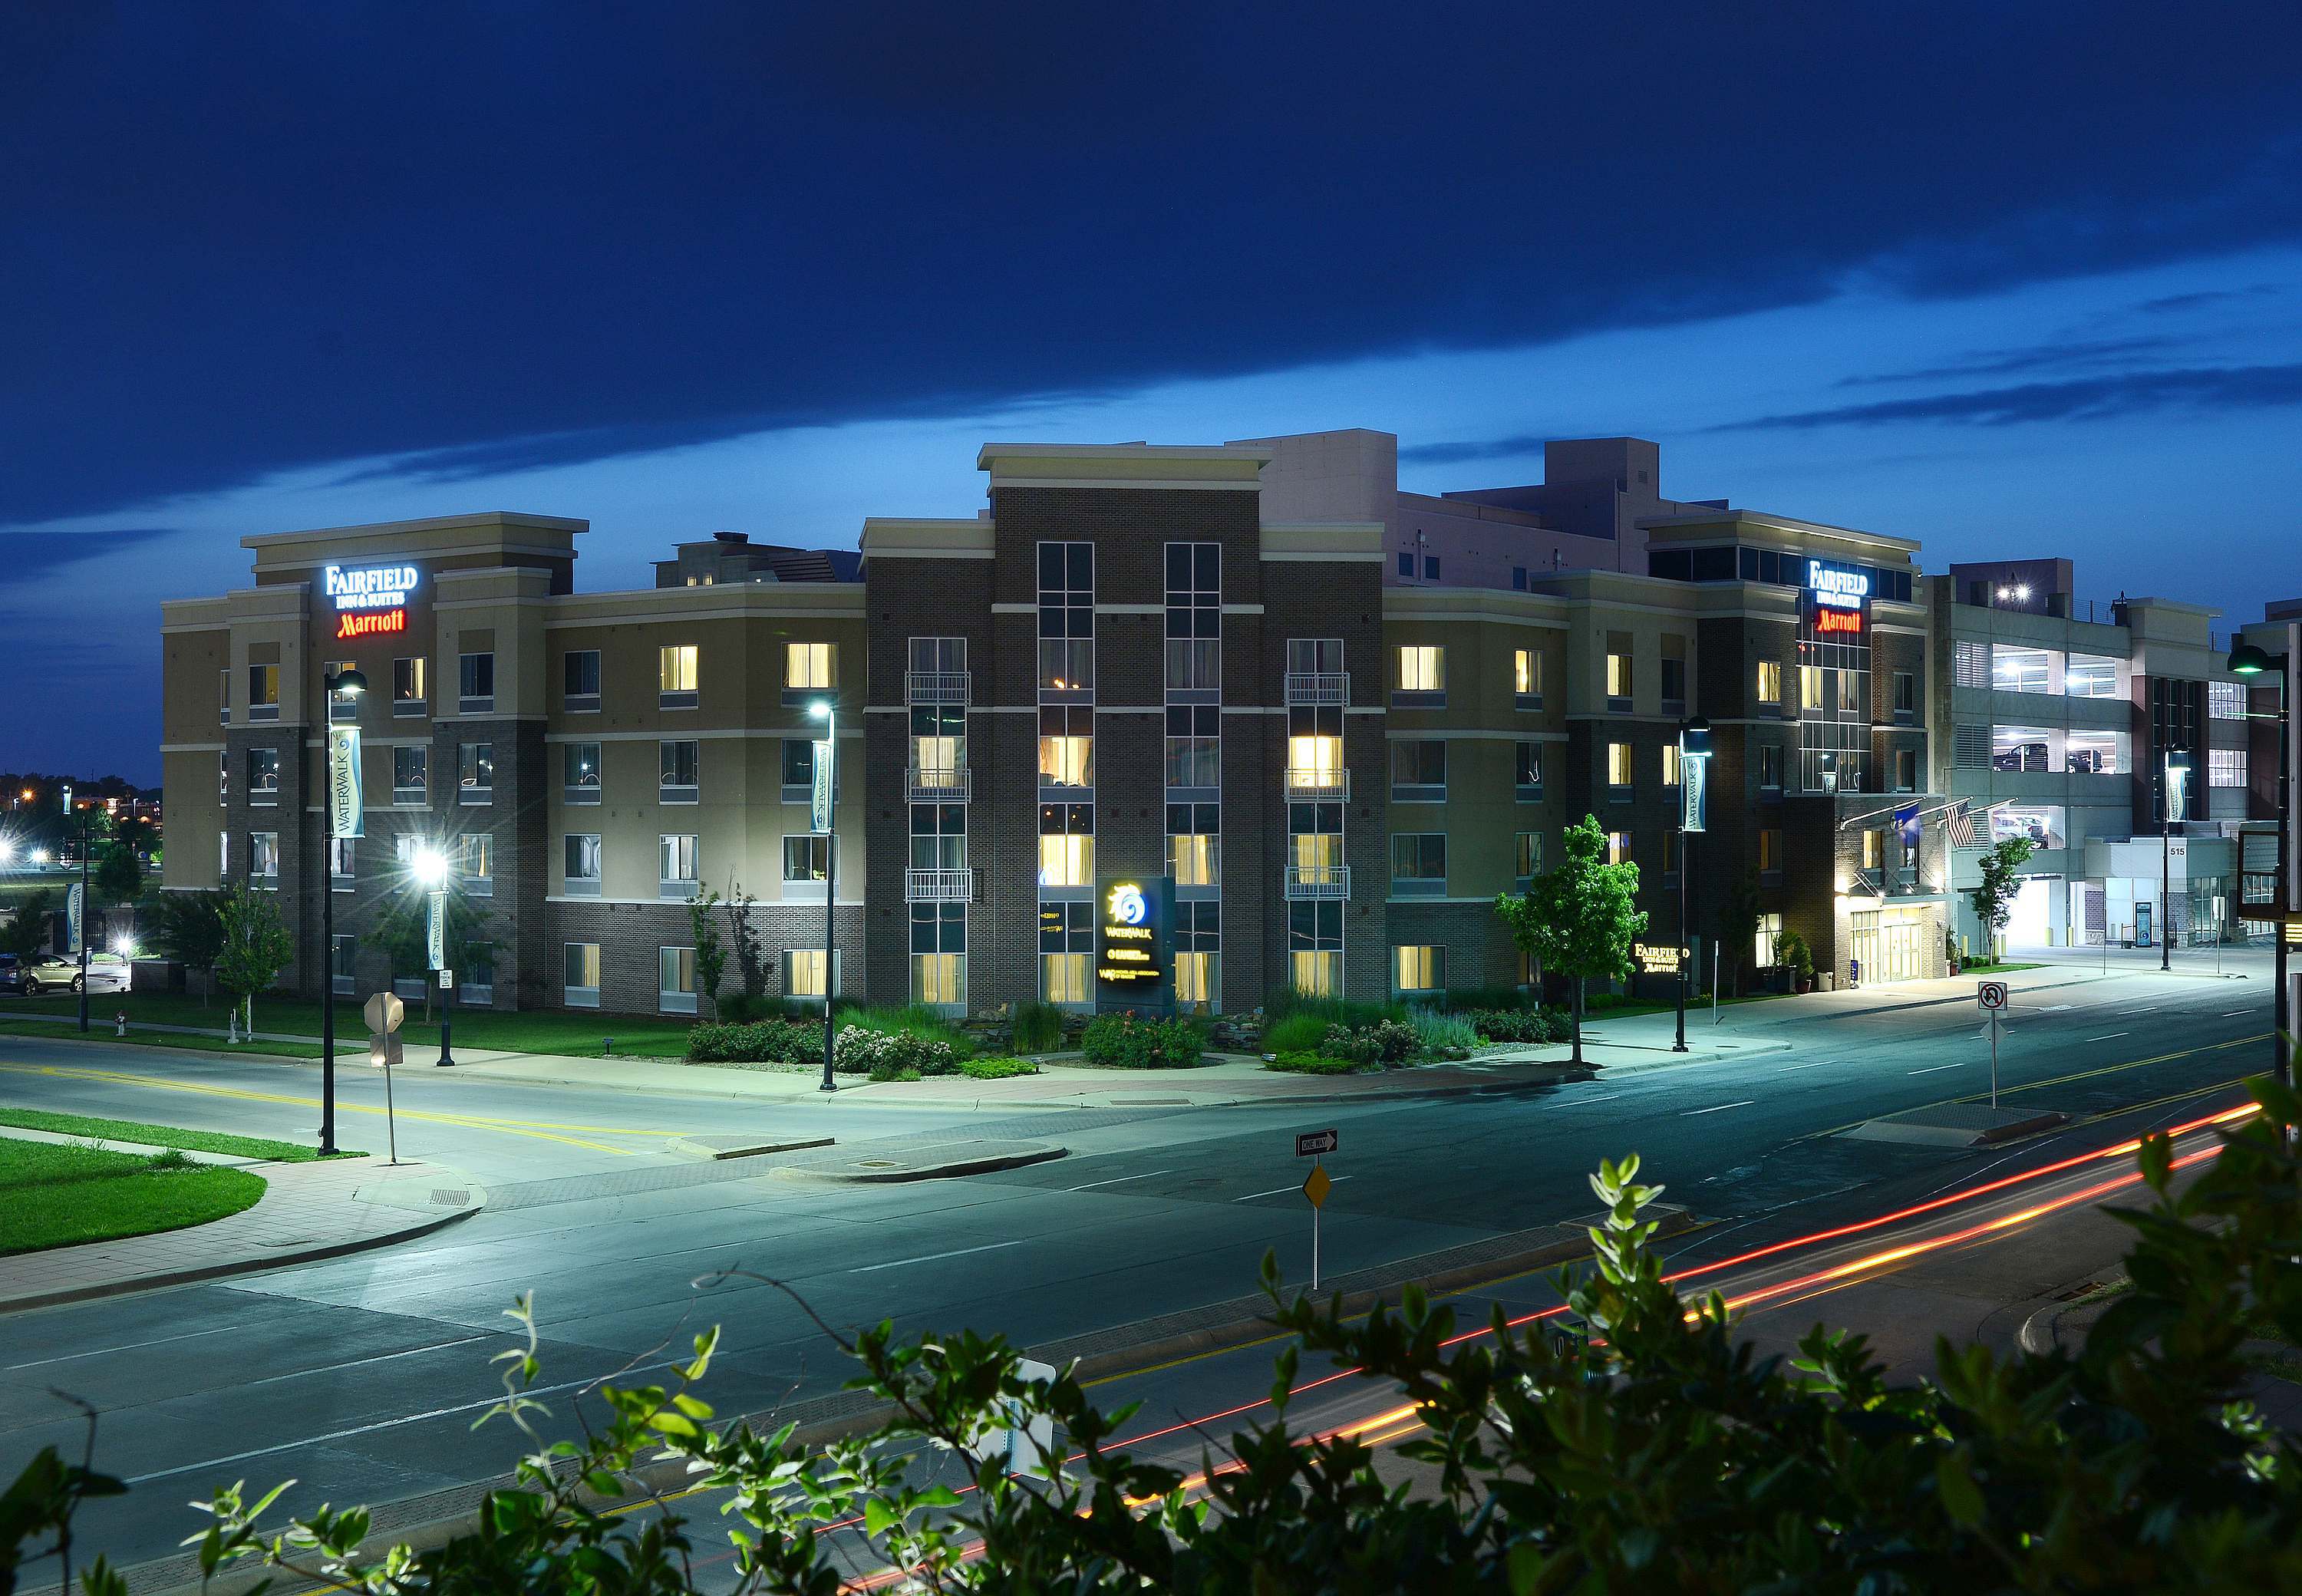 Photo of Fairfield Inn & Suites Wichita Downtown, Wichita, KS